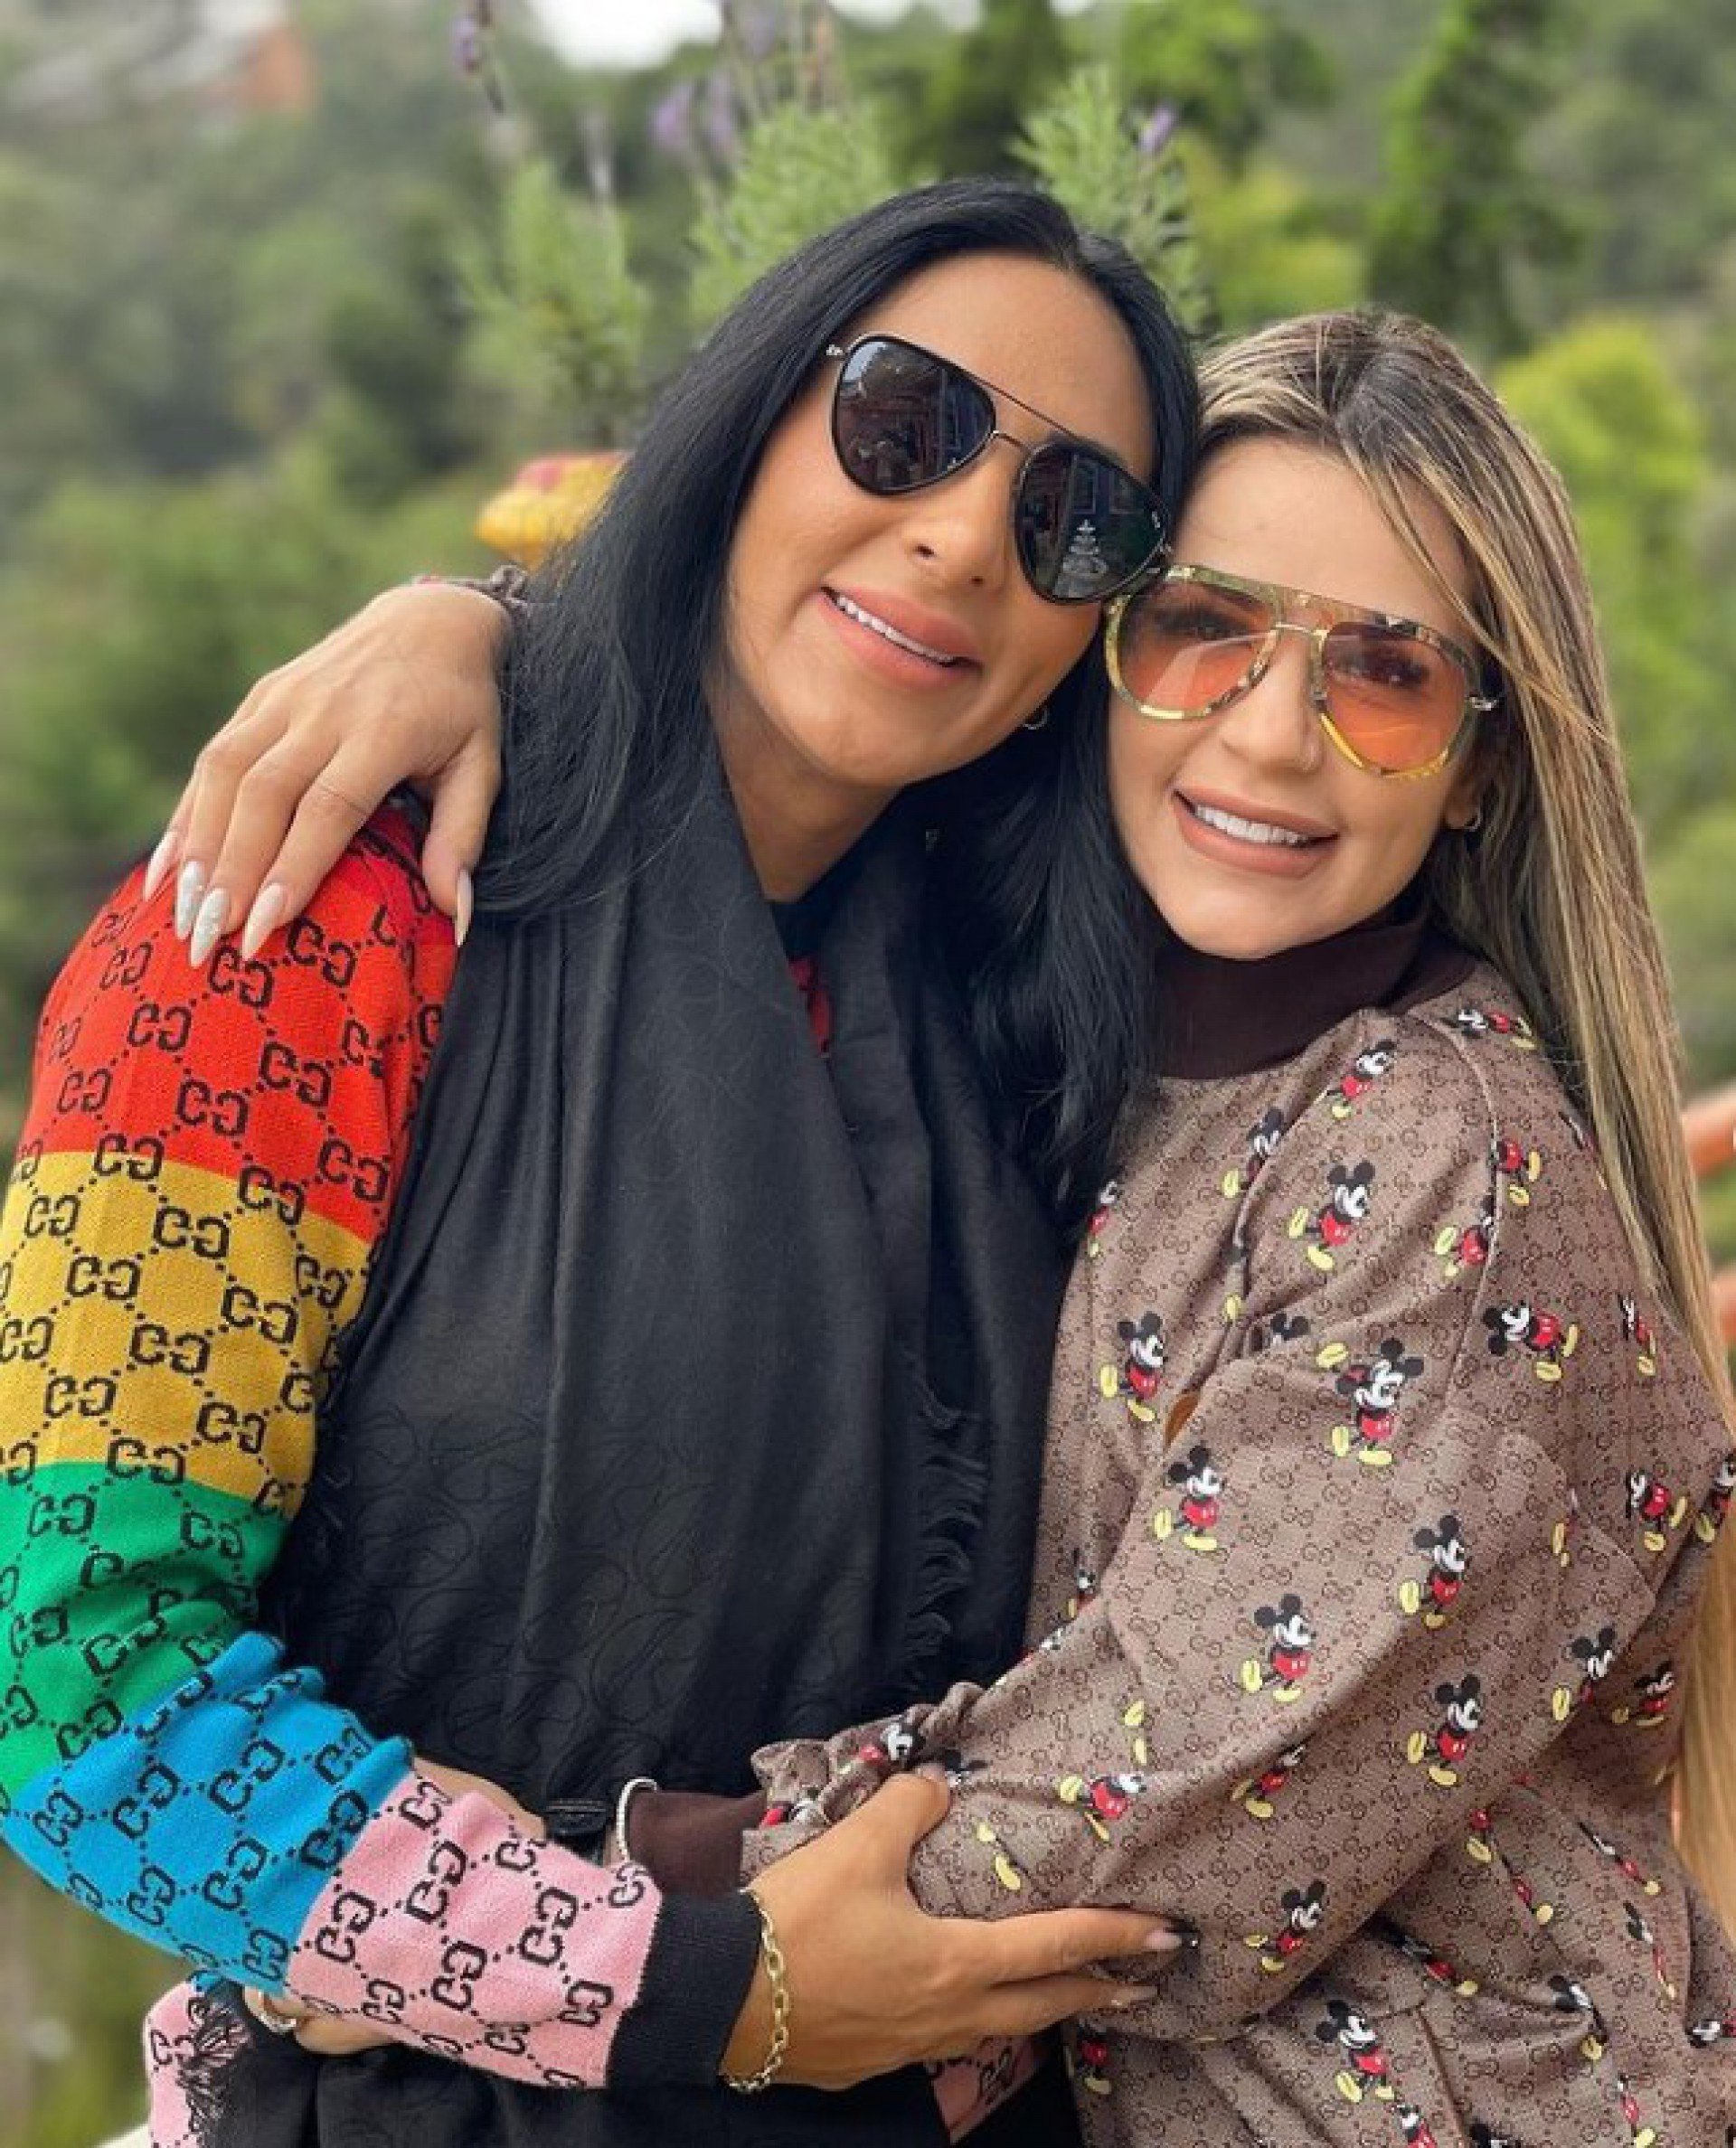 Dayanne Bezerra and Deolane Bezerra - Reproduction/Instagram